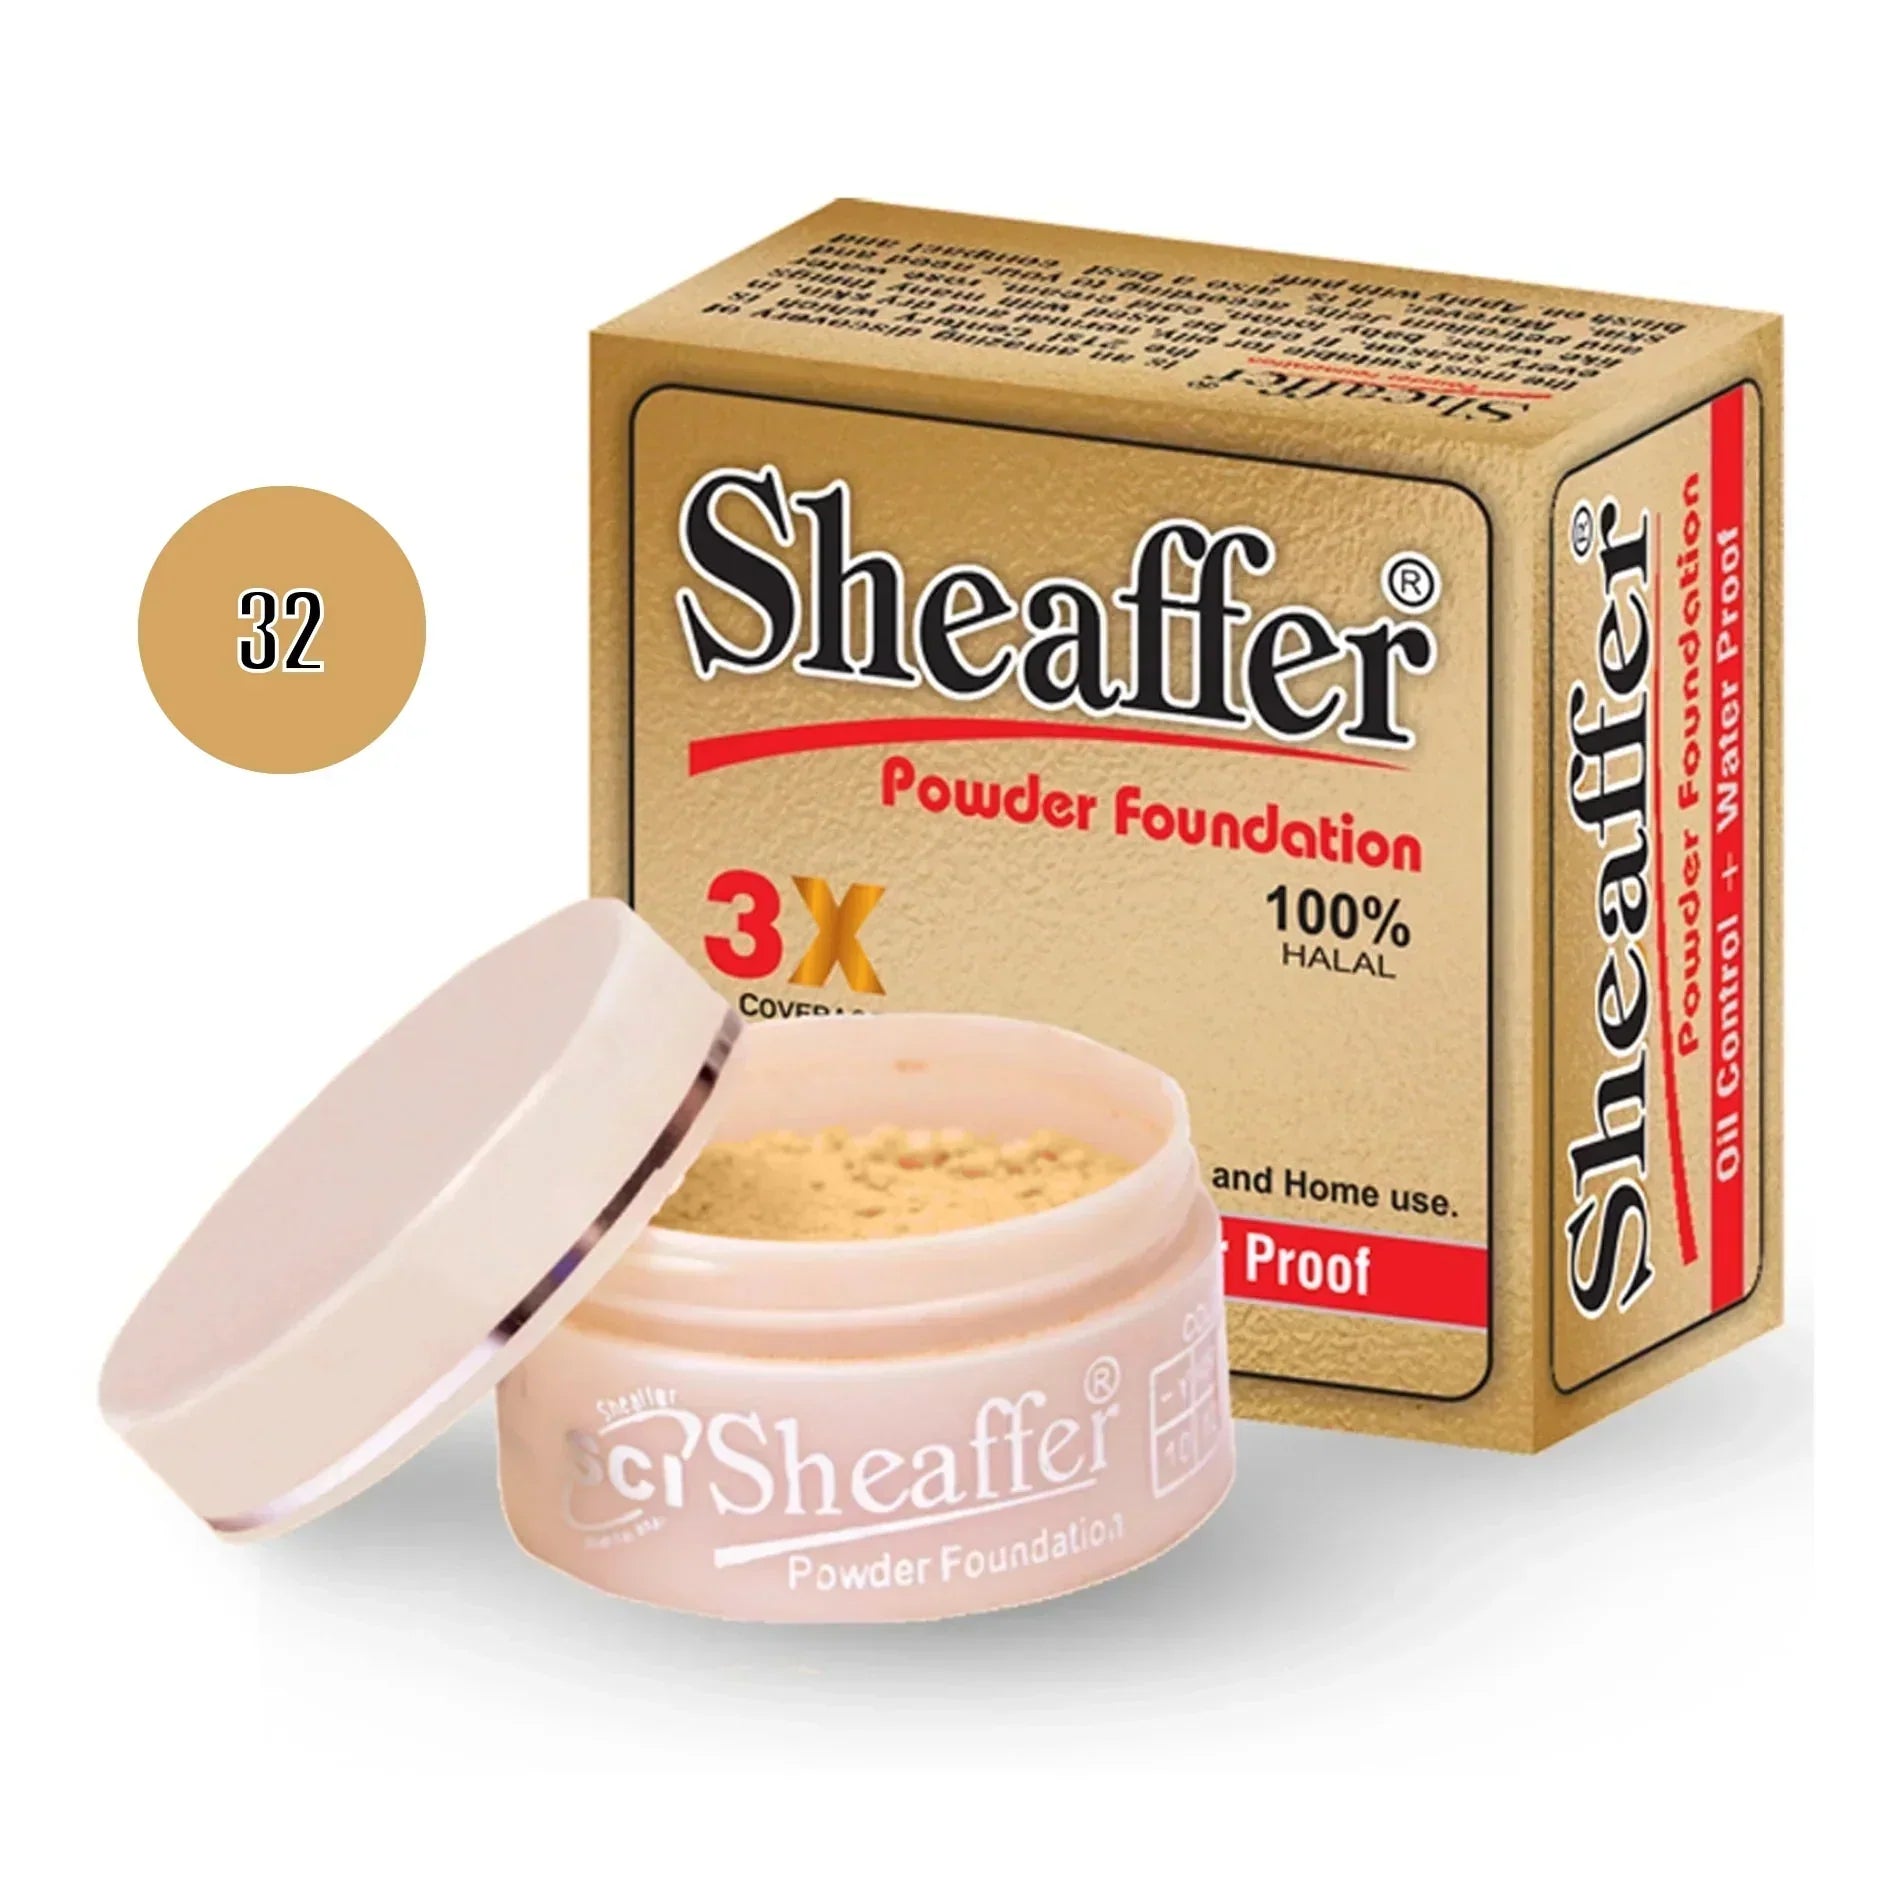 Sheaffer Powder Foundation Base P4 Shade - Retailershop - Online Shopping Center